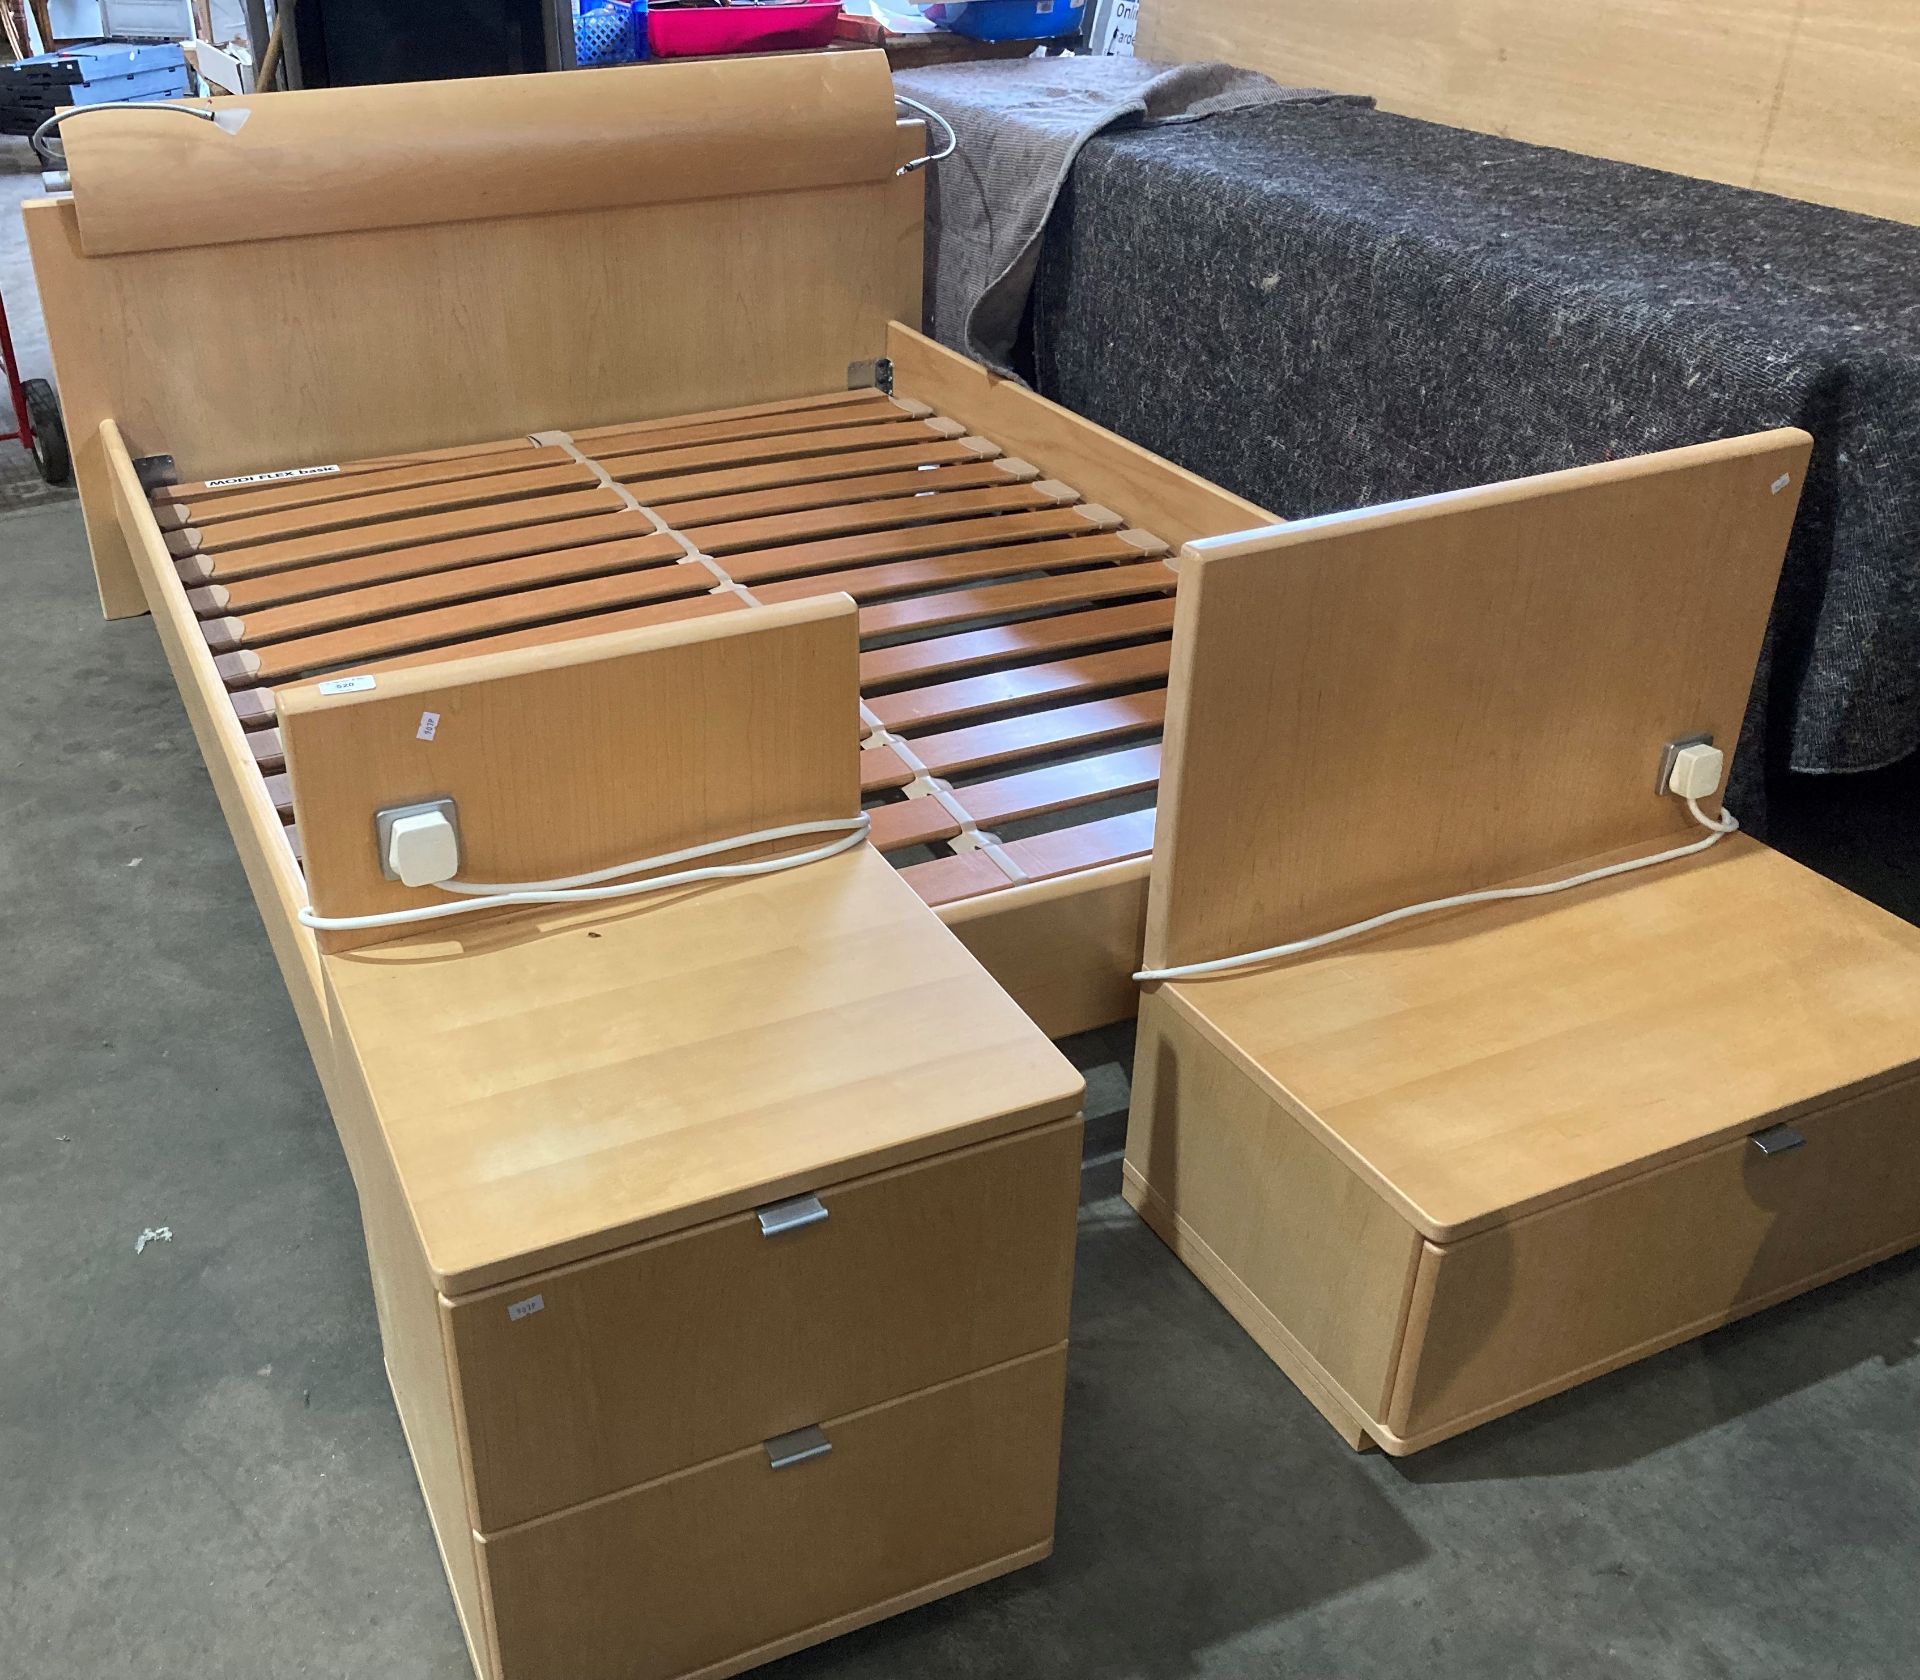 Ulster wood framed double bed complete with modi flex basic slatted base,